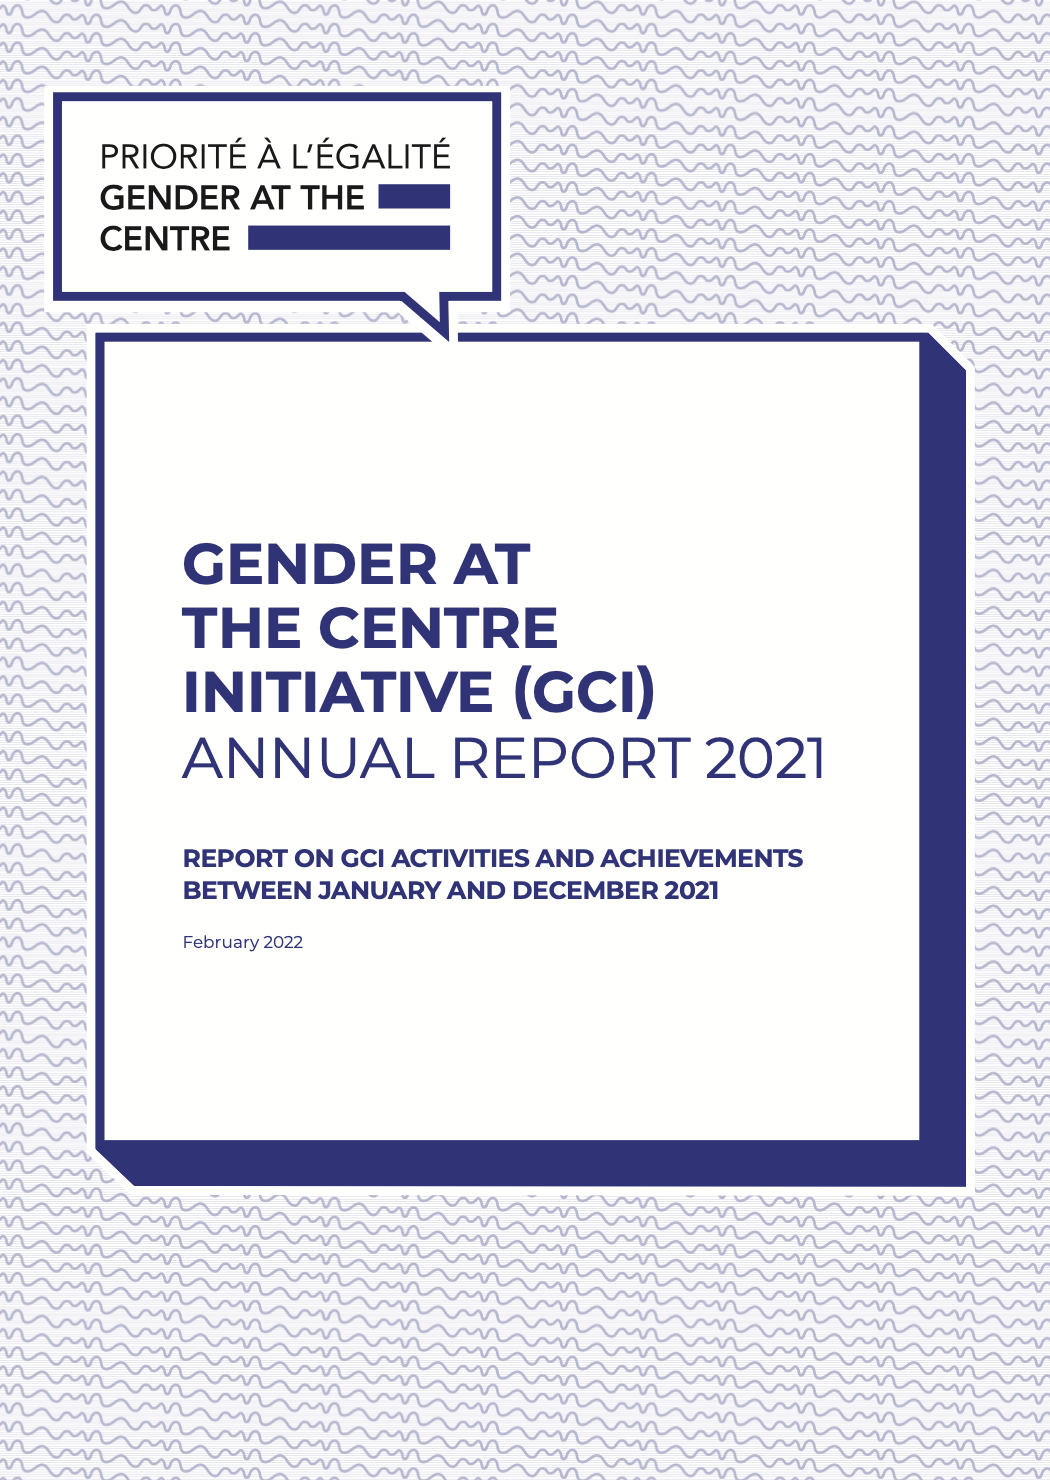 Gender at the Centre Initiative (GCI) Annual Report 2021